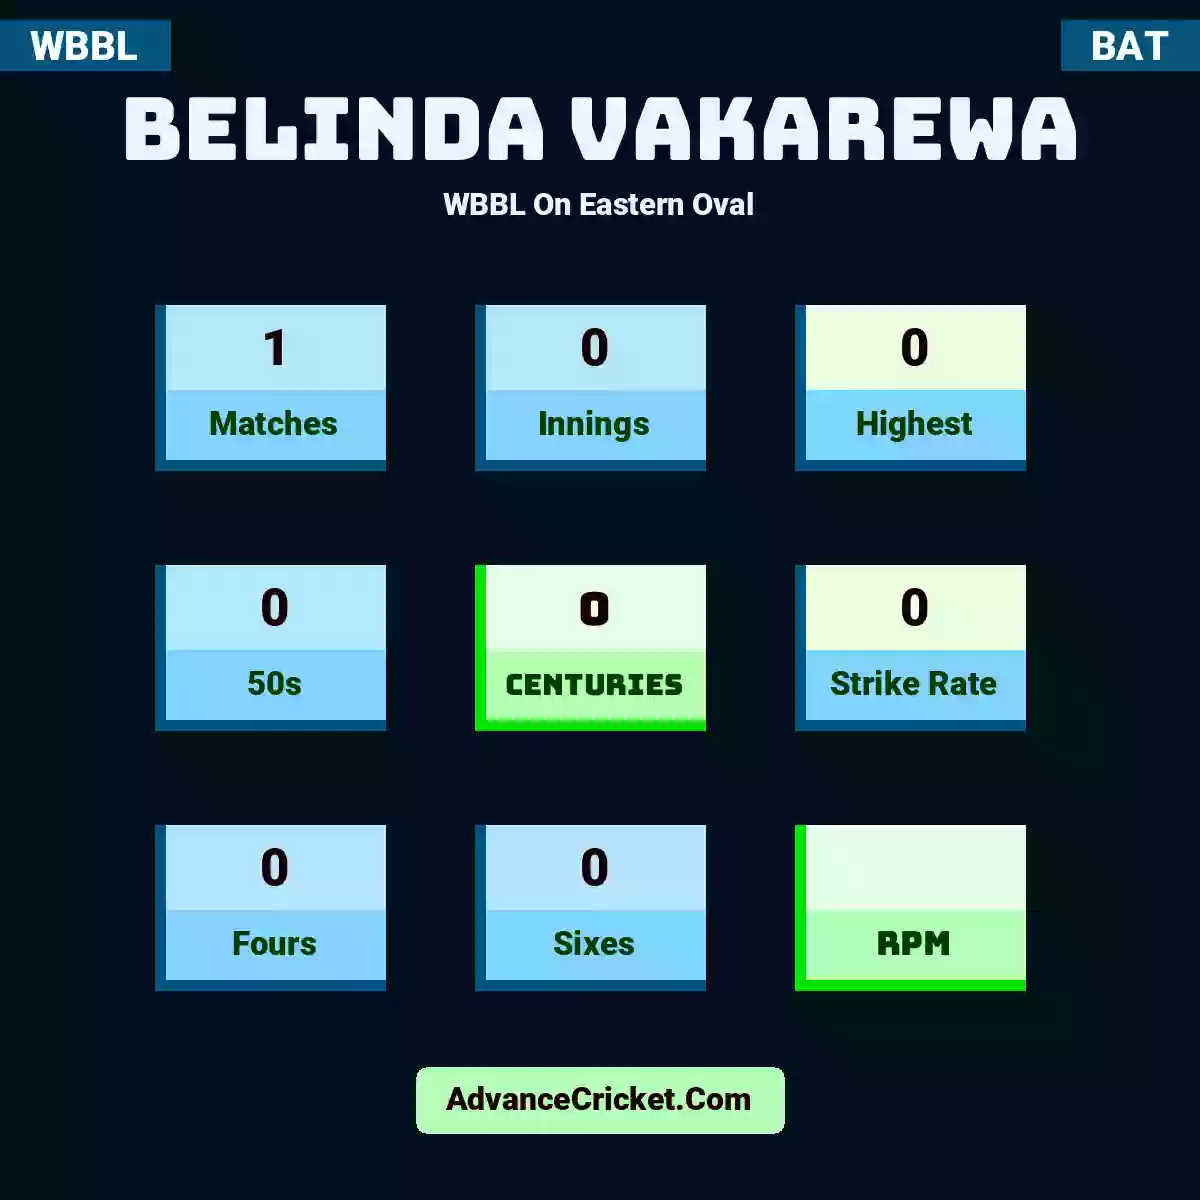 Belinda Vakarewa WBBL  On Eastern Oval, Belinda Vakarewa played 1 matches, scored 0 runs as highest, 0 half-centuries, and 0 centuries, with a strike rate of 0. B.Vakarewa hit 0 fours and 0 sixes.